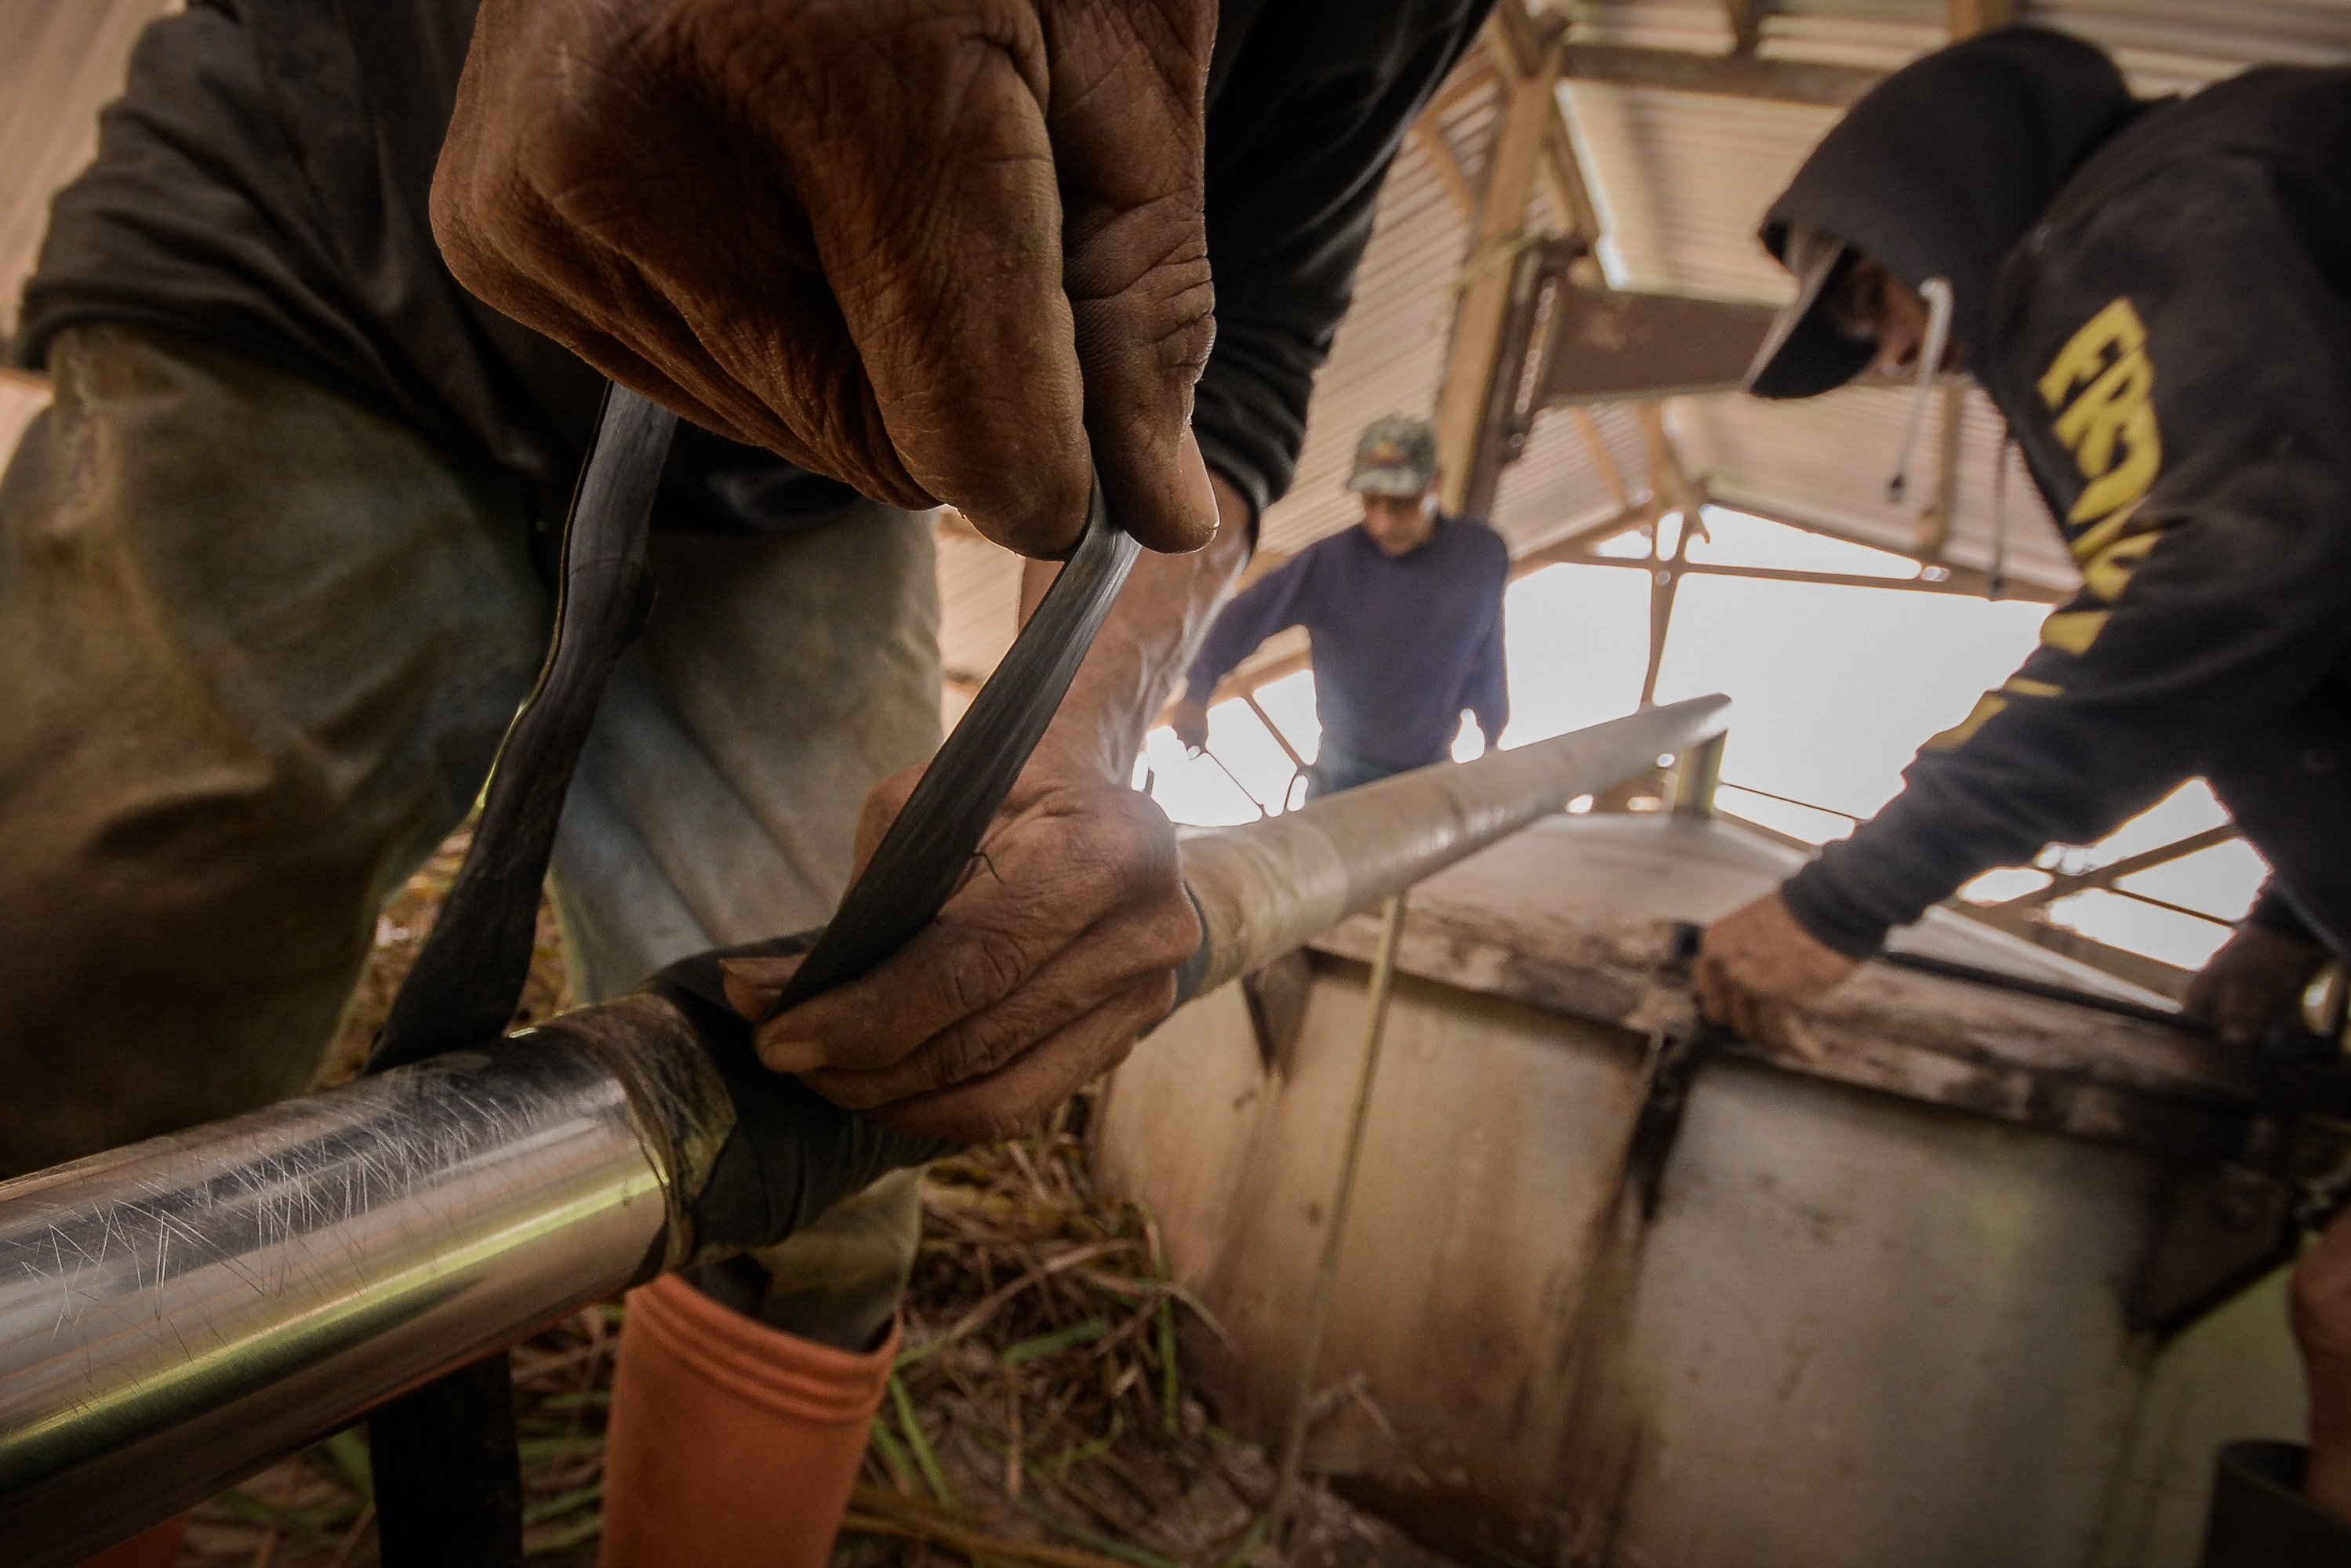 Sejumlah pekerja menyiapkan proses penyulingan serai wangi di Desa Tountimomor, Kakas Barat, Minahasa, Sulawesi Utara. Minyak hasil sulingan serai wangi digunakan sebagai bahan pembuatan minyak wangi, sabun, sampo dan produk lainnya.